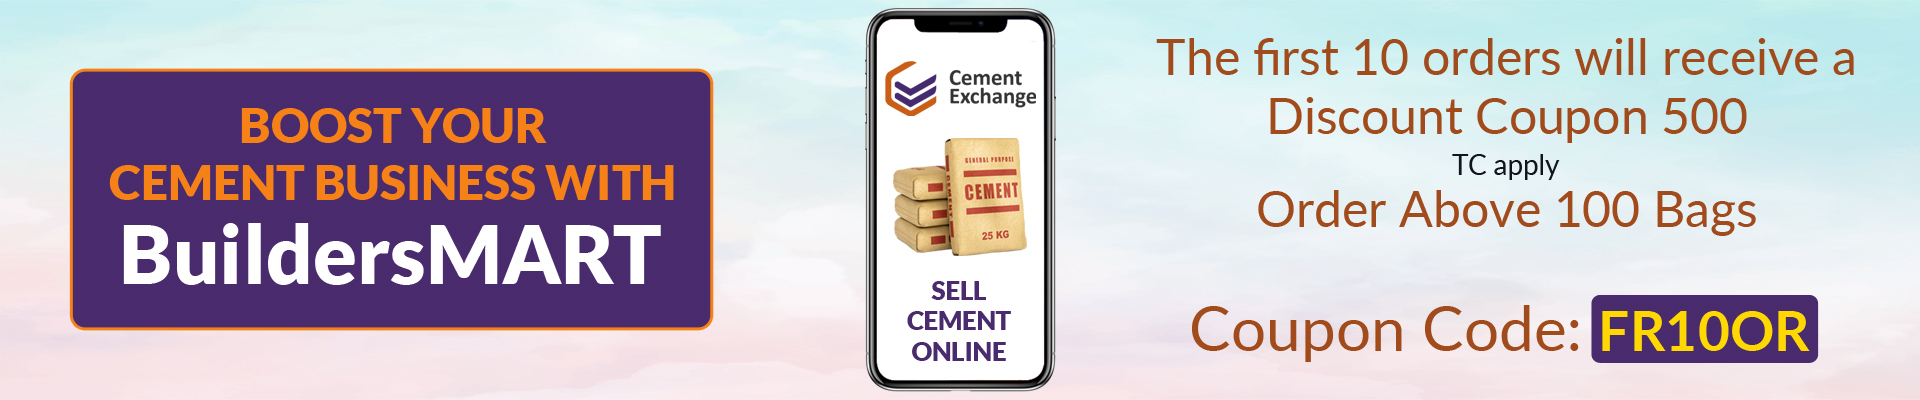 Cement_Exchange